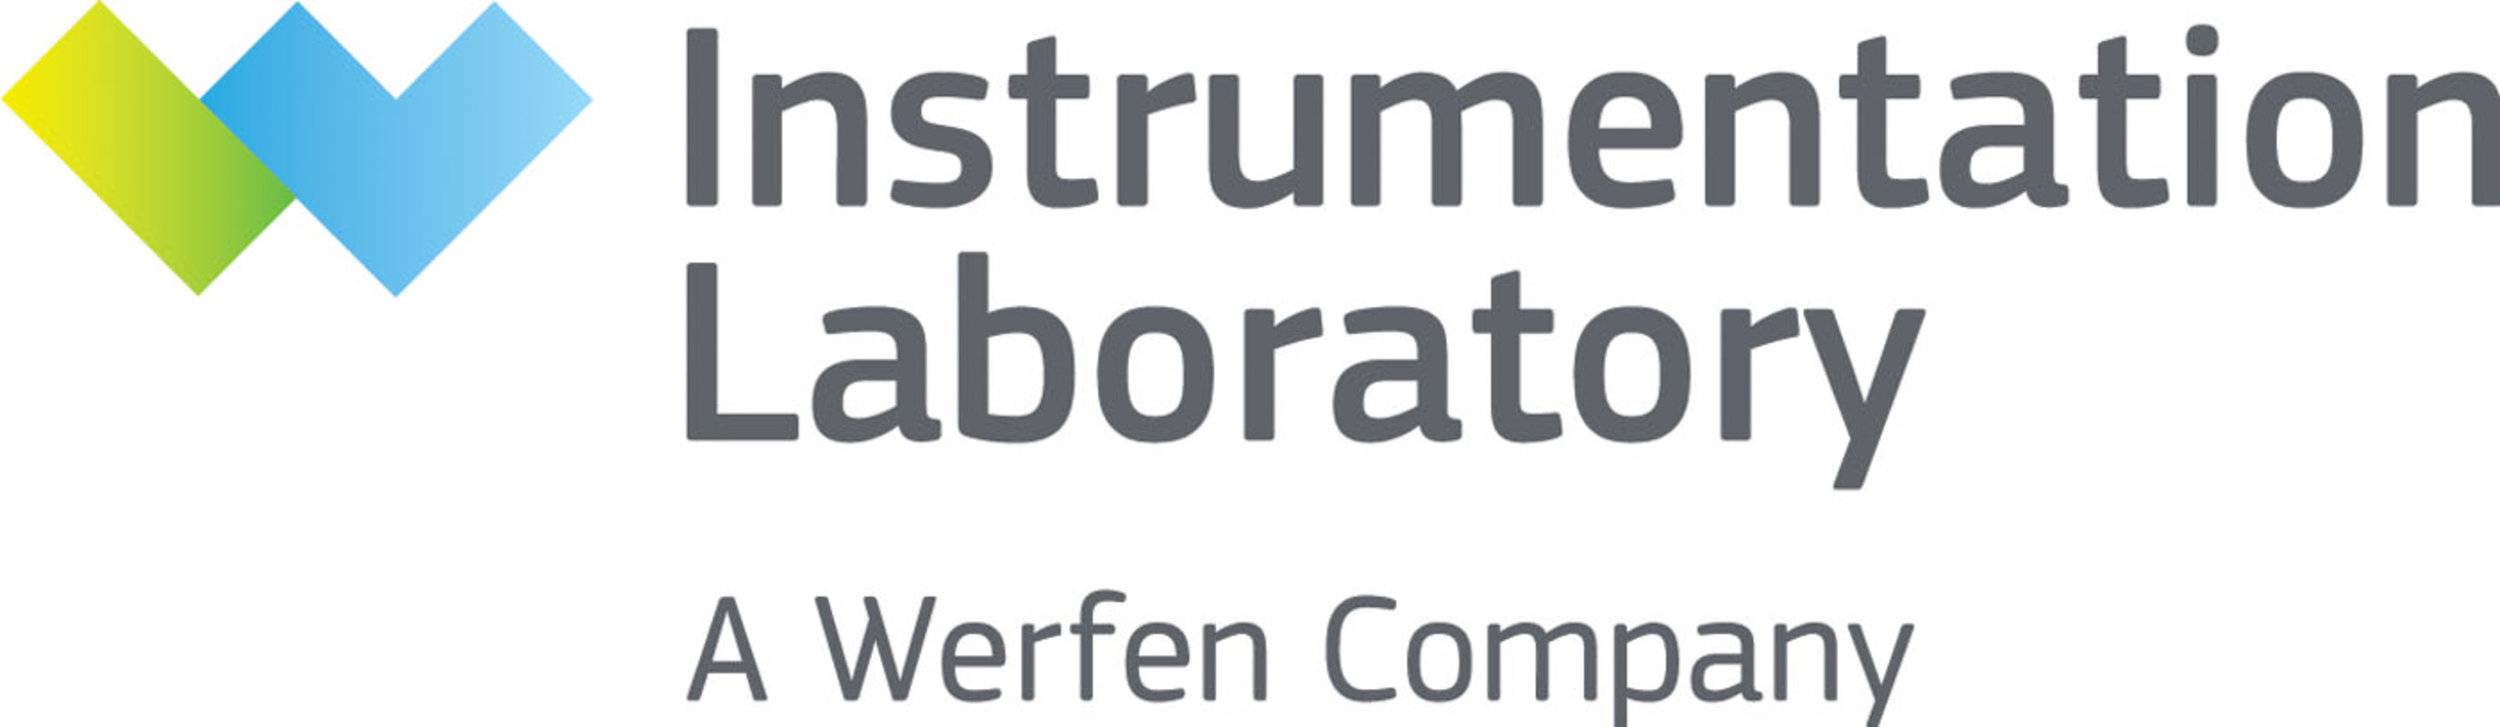 Instrumentation Lab Logo.jpg